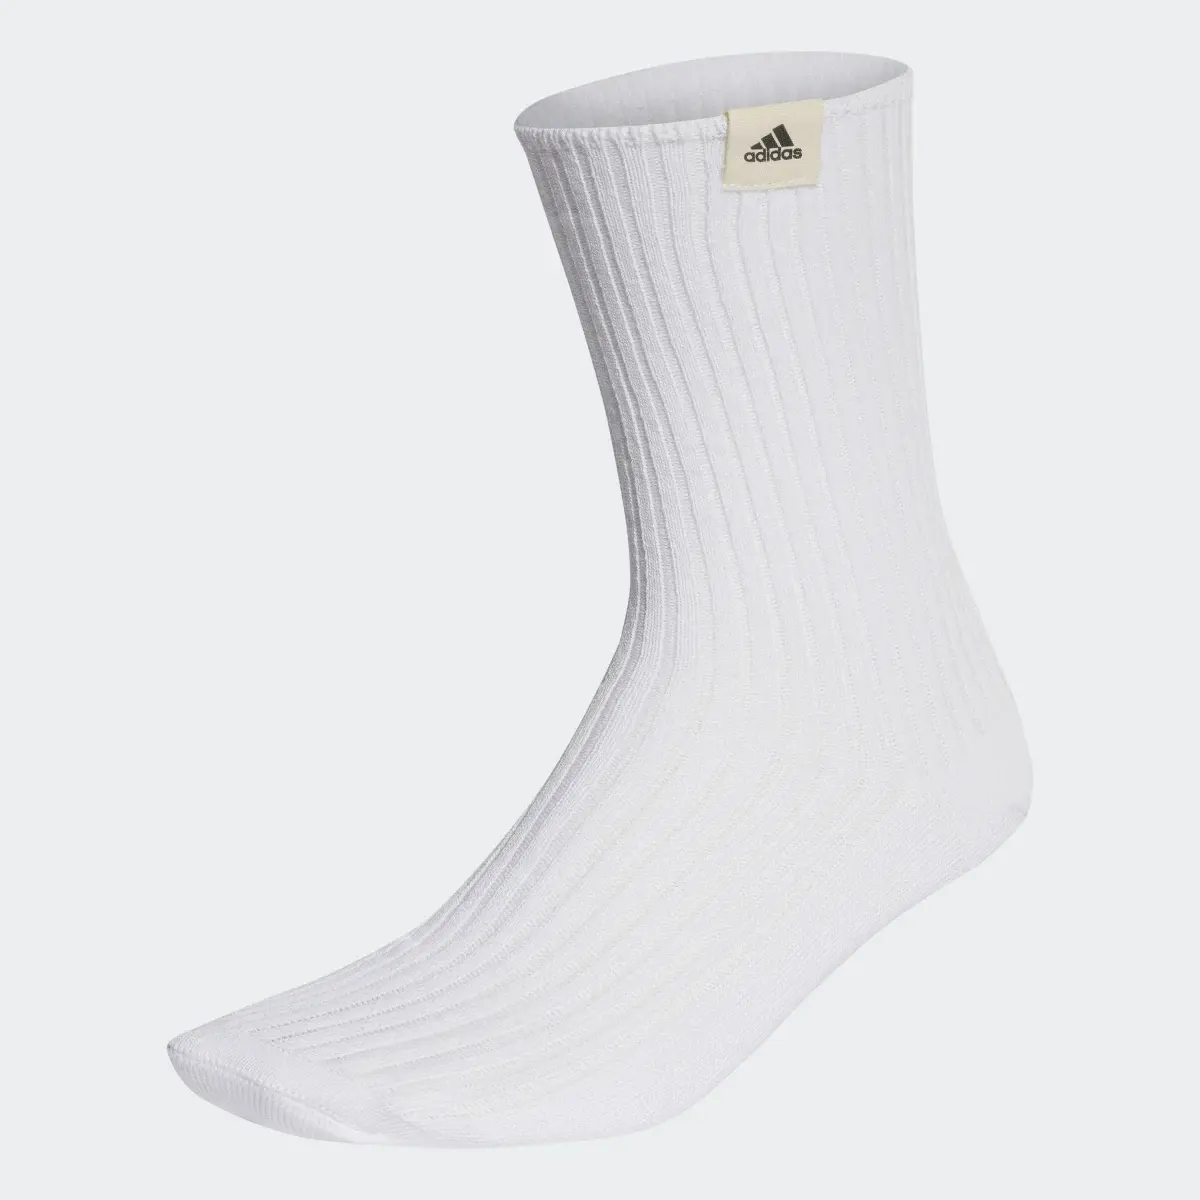 Adidas Best Label Socks 1 Pair. 2